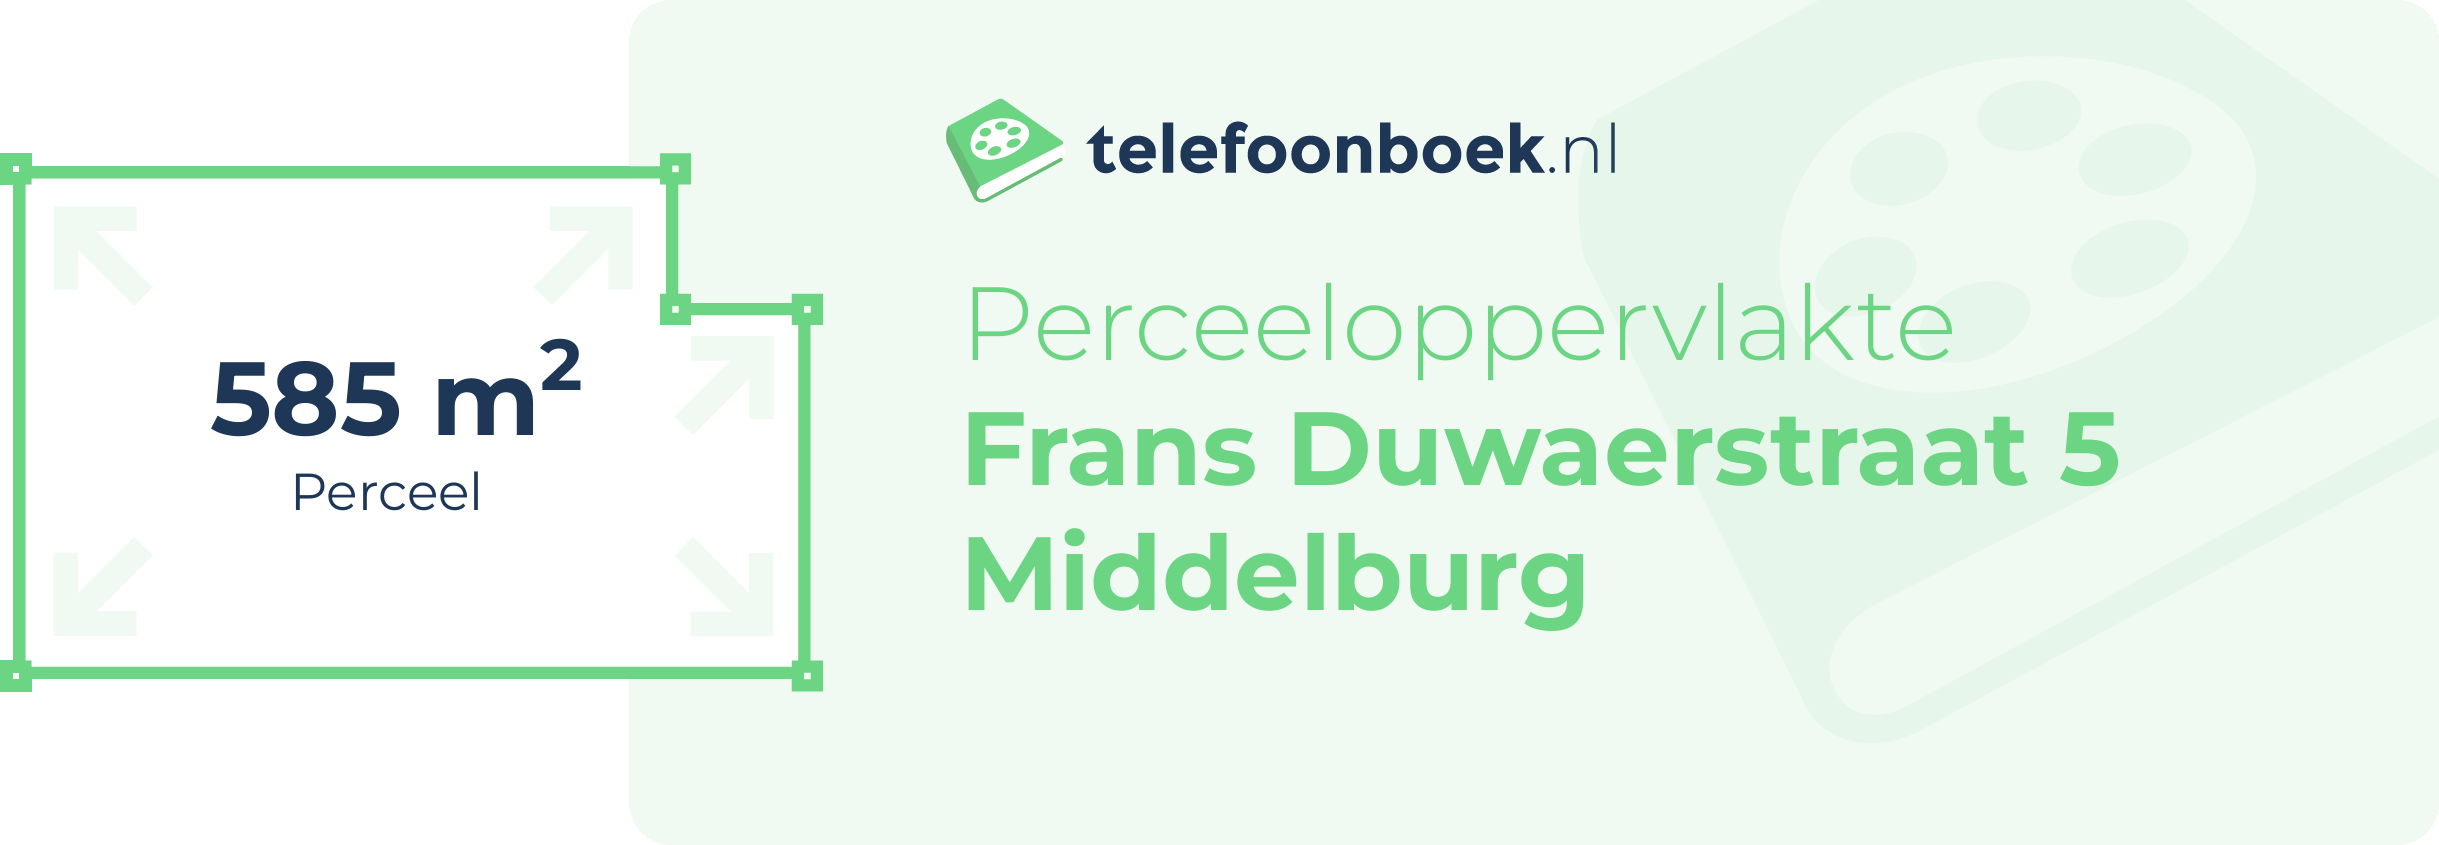 Perceeloppervlakte Frans Duwaerstraat 5 Middelburg